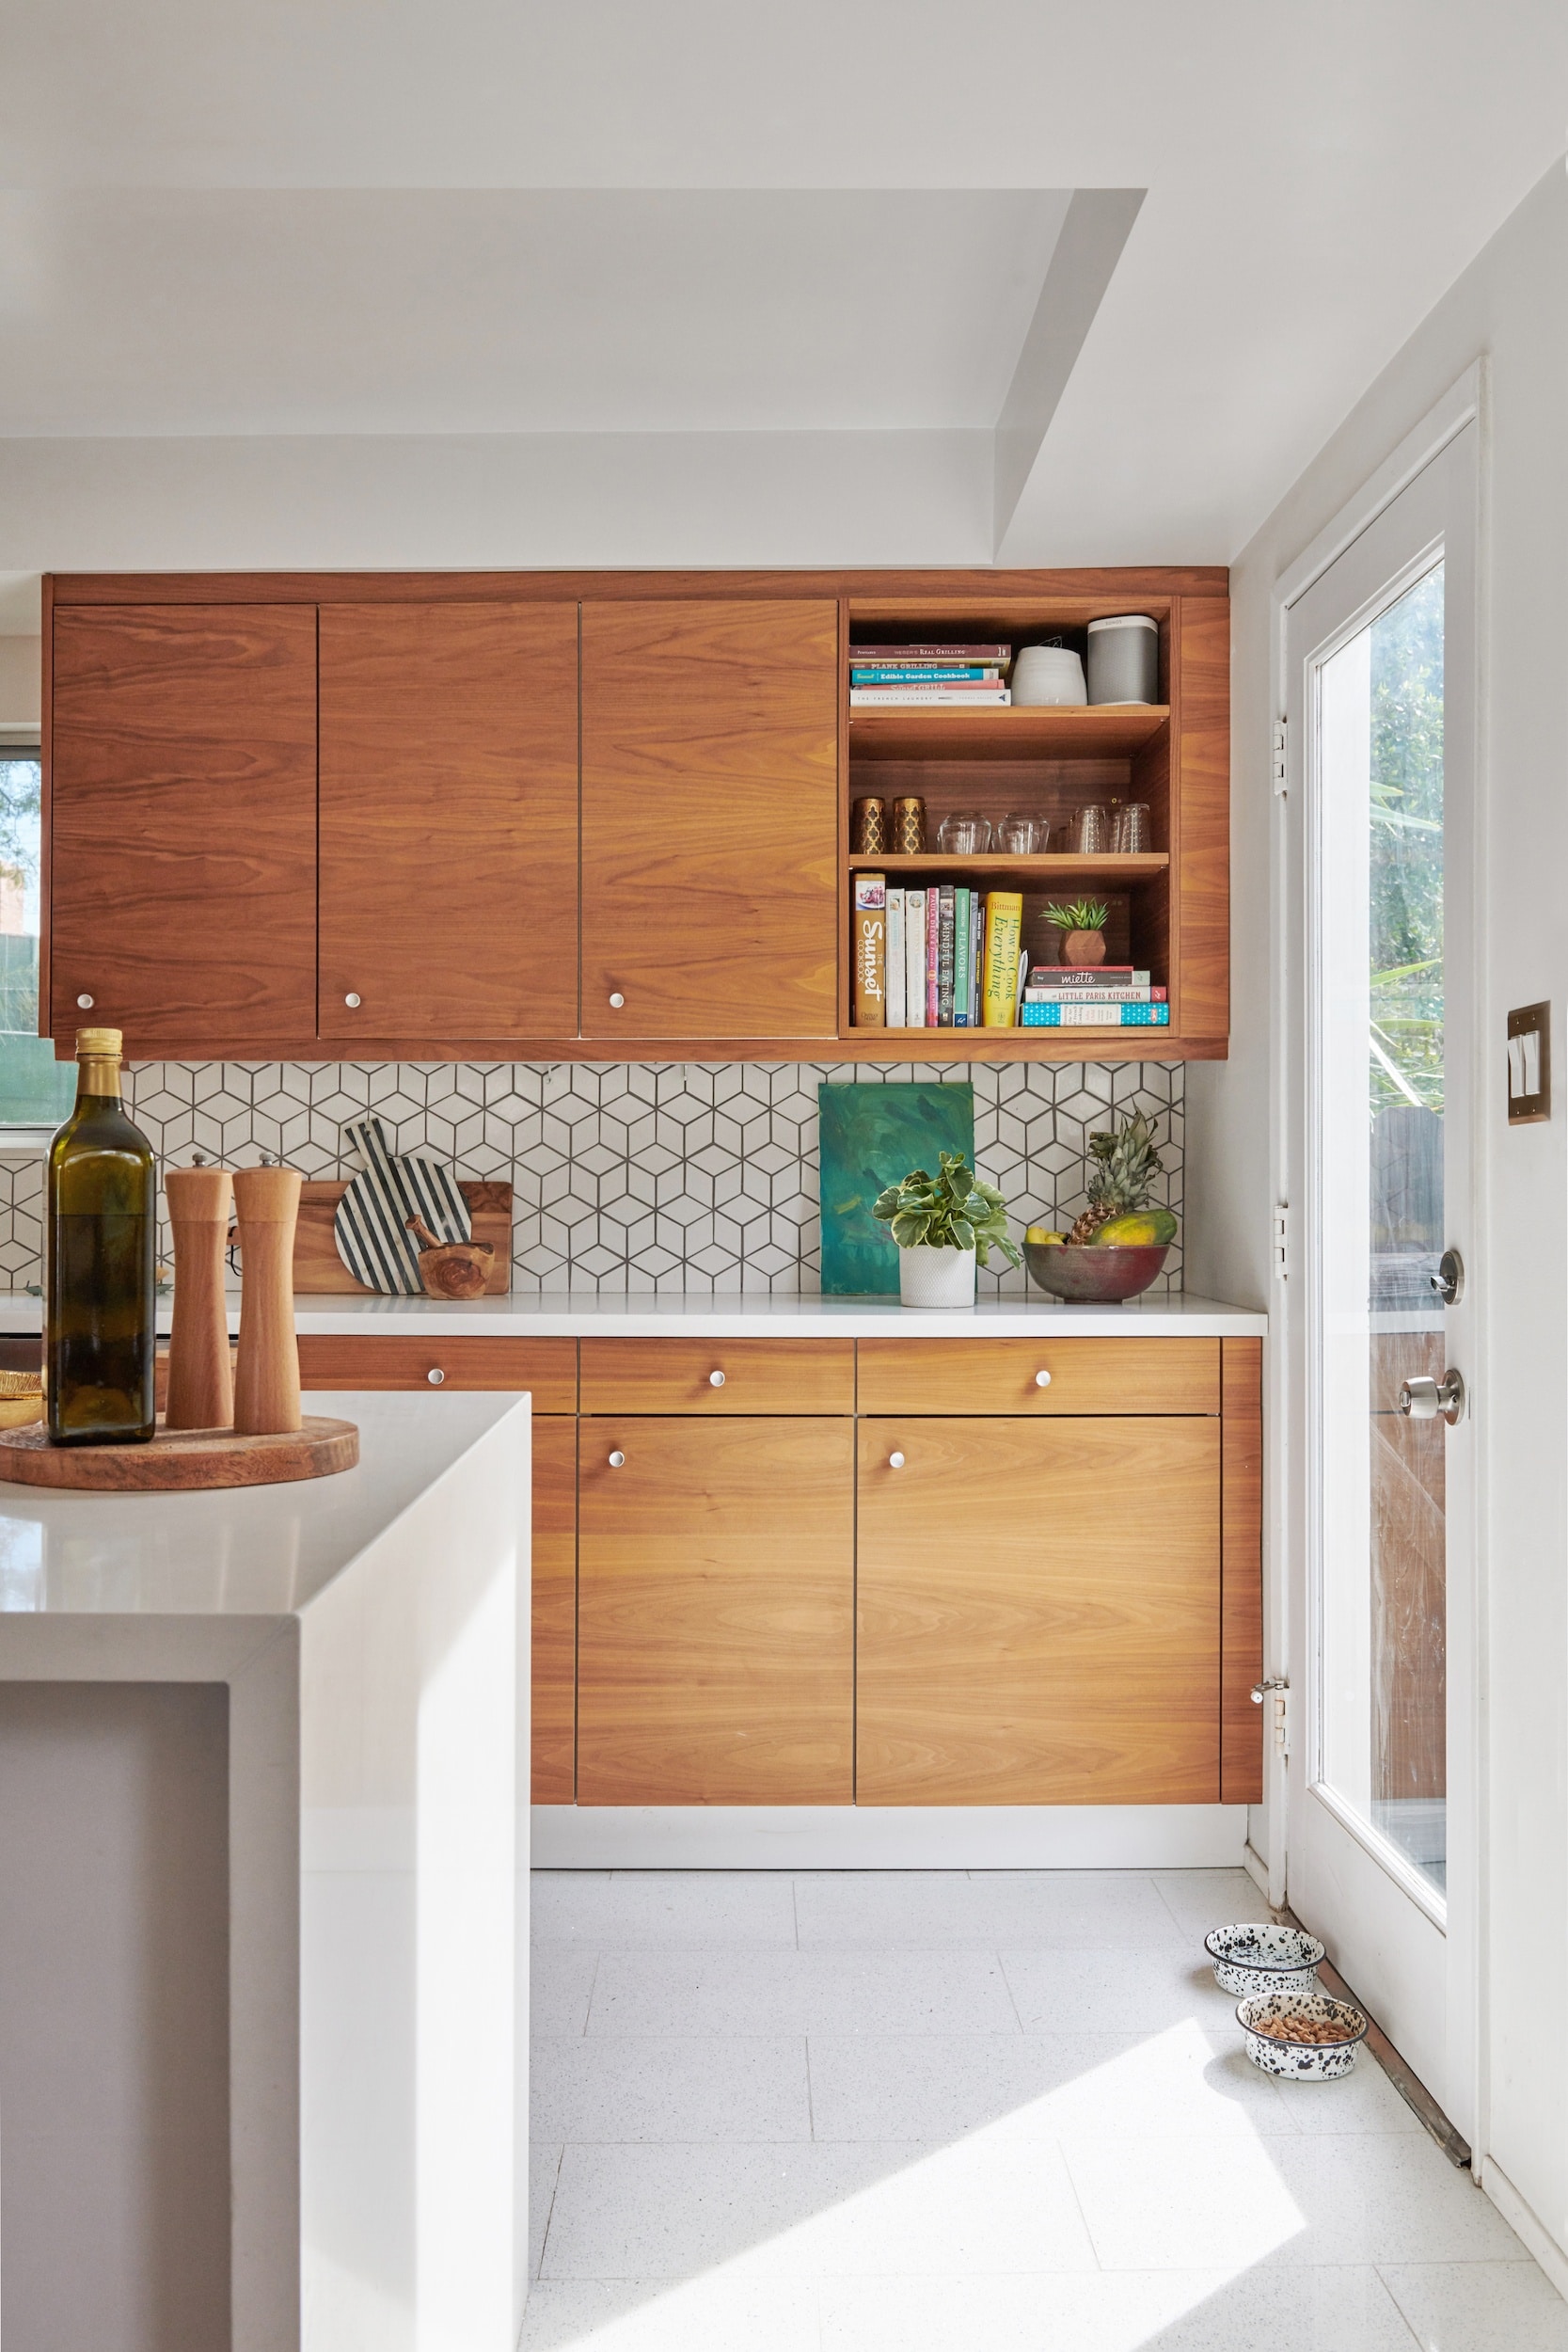 walnut kitchen cabinets that reinvent an old classic - semistories